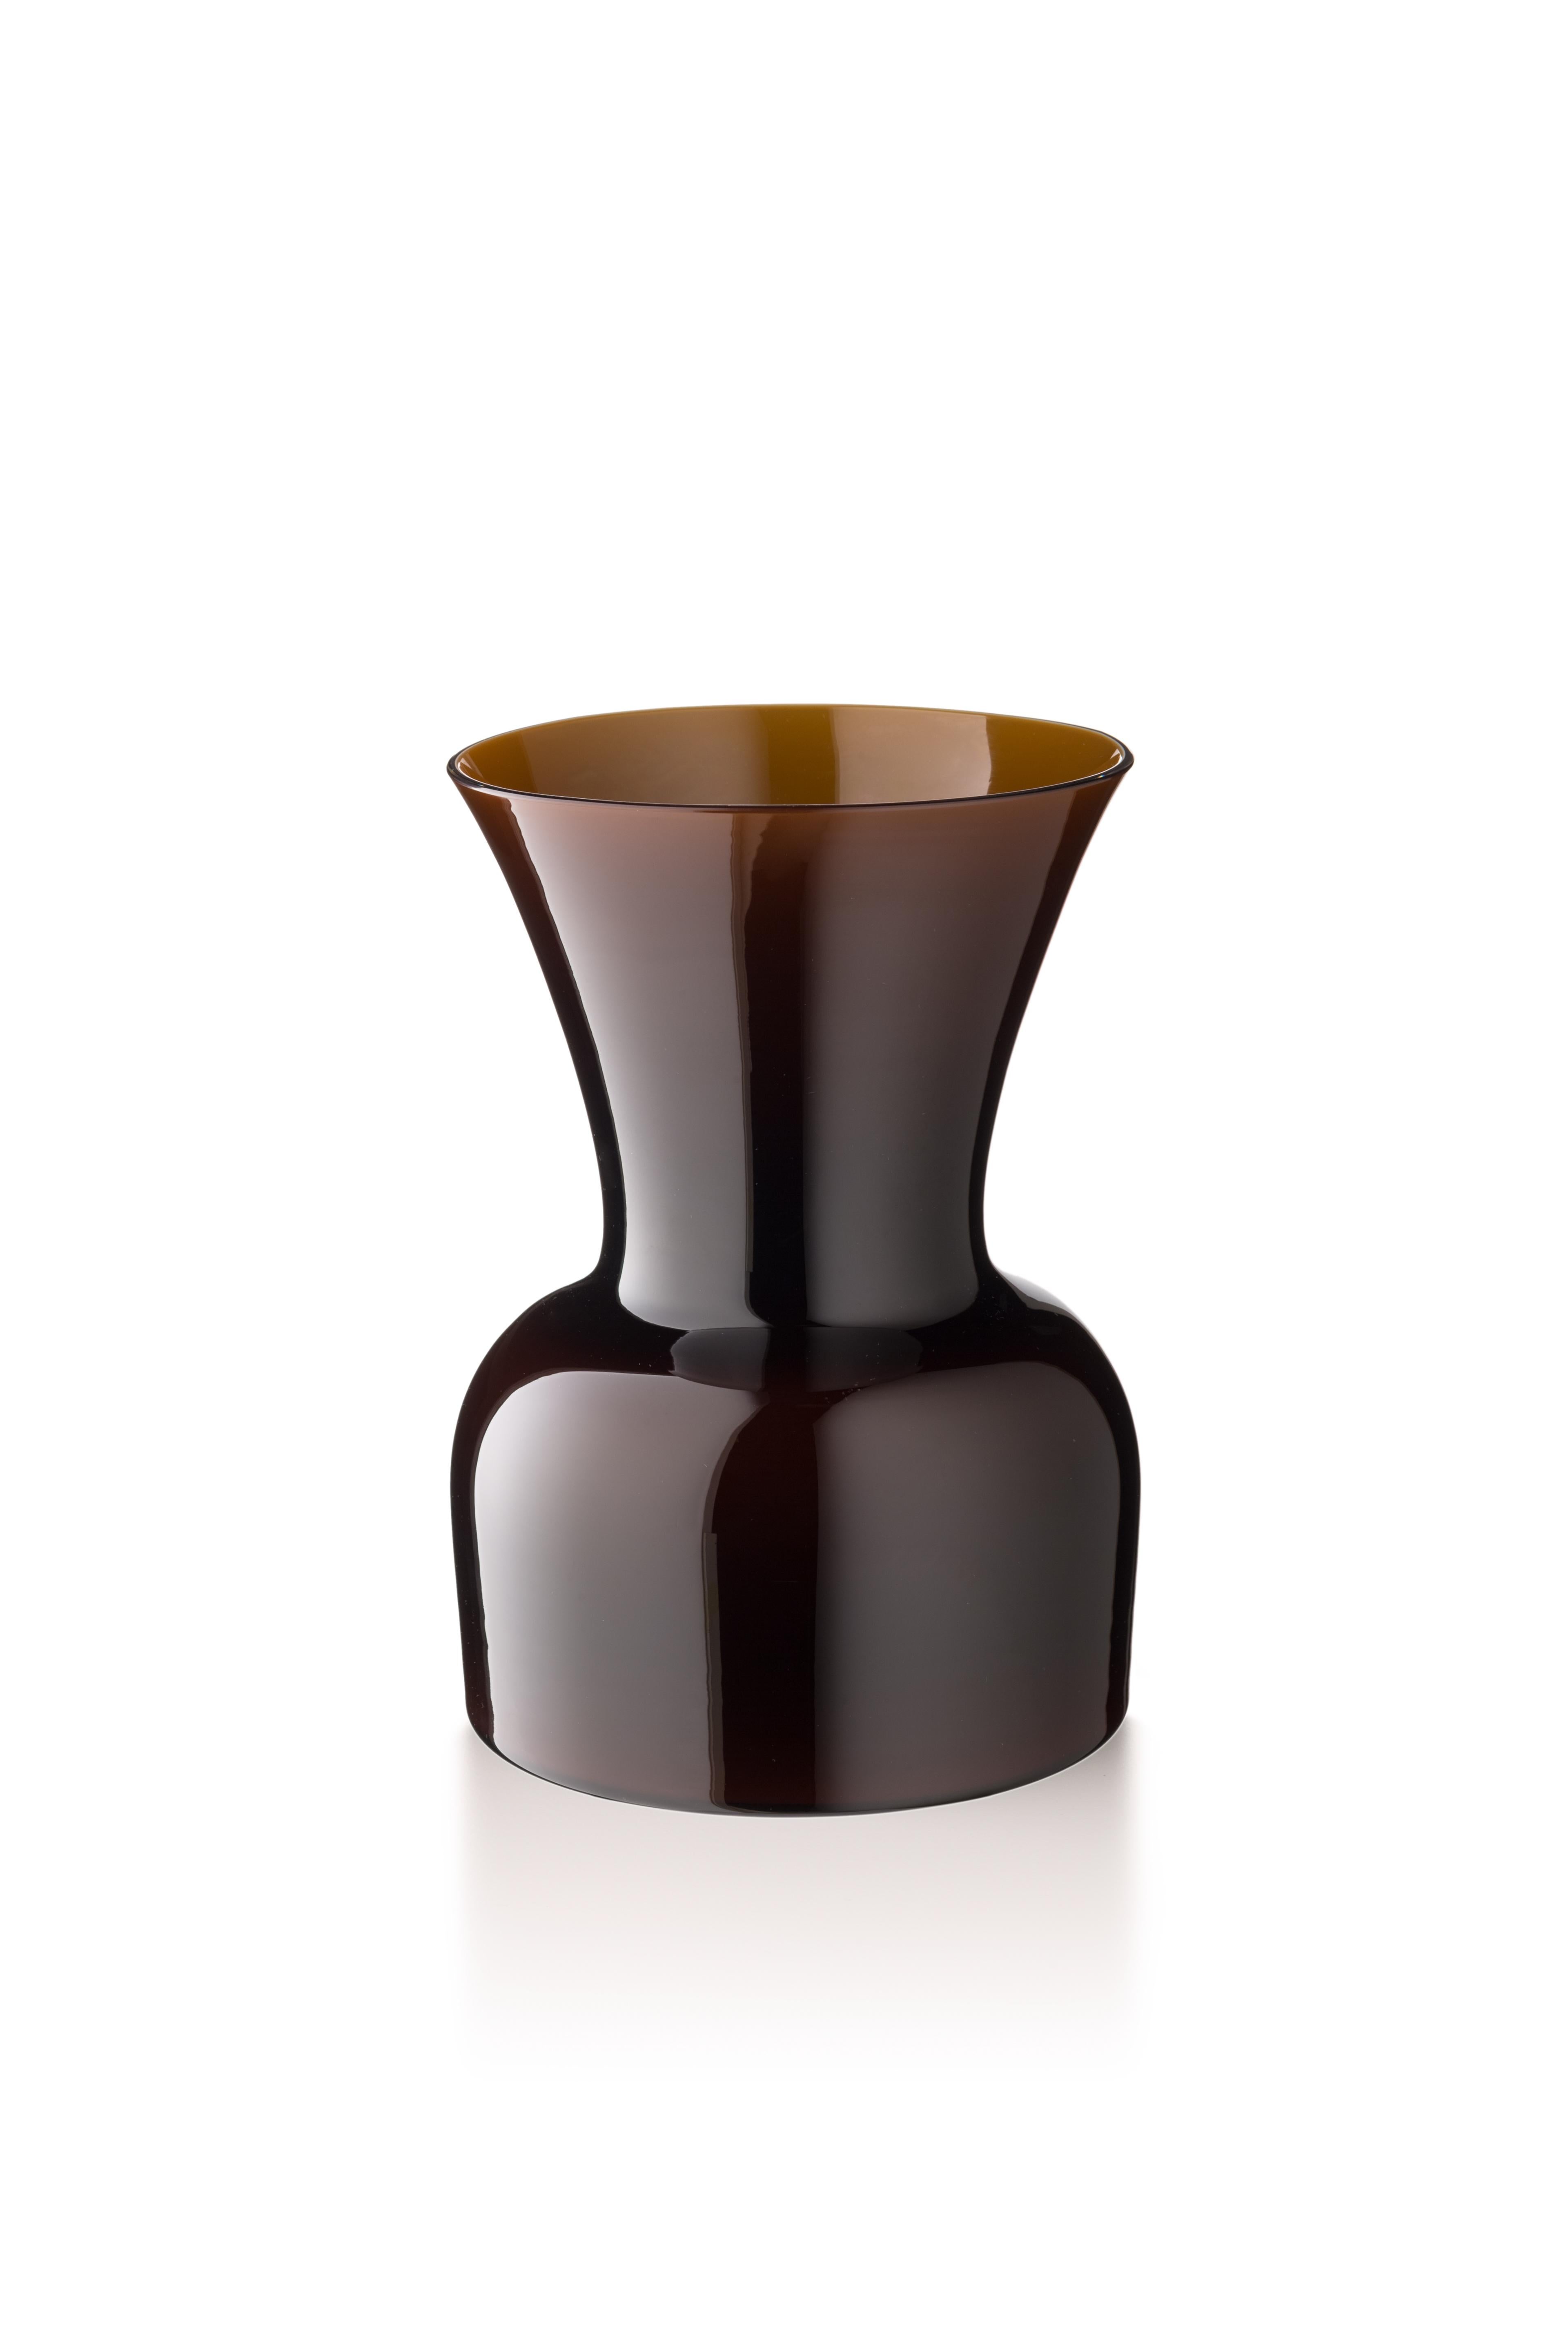 Red (10064) Medium Profili Daisy Murano Glass Vase by Anna Gili